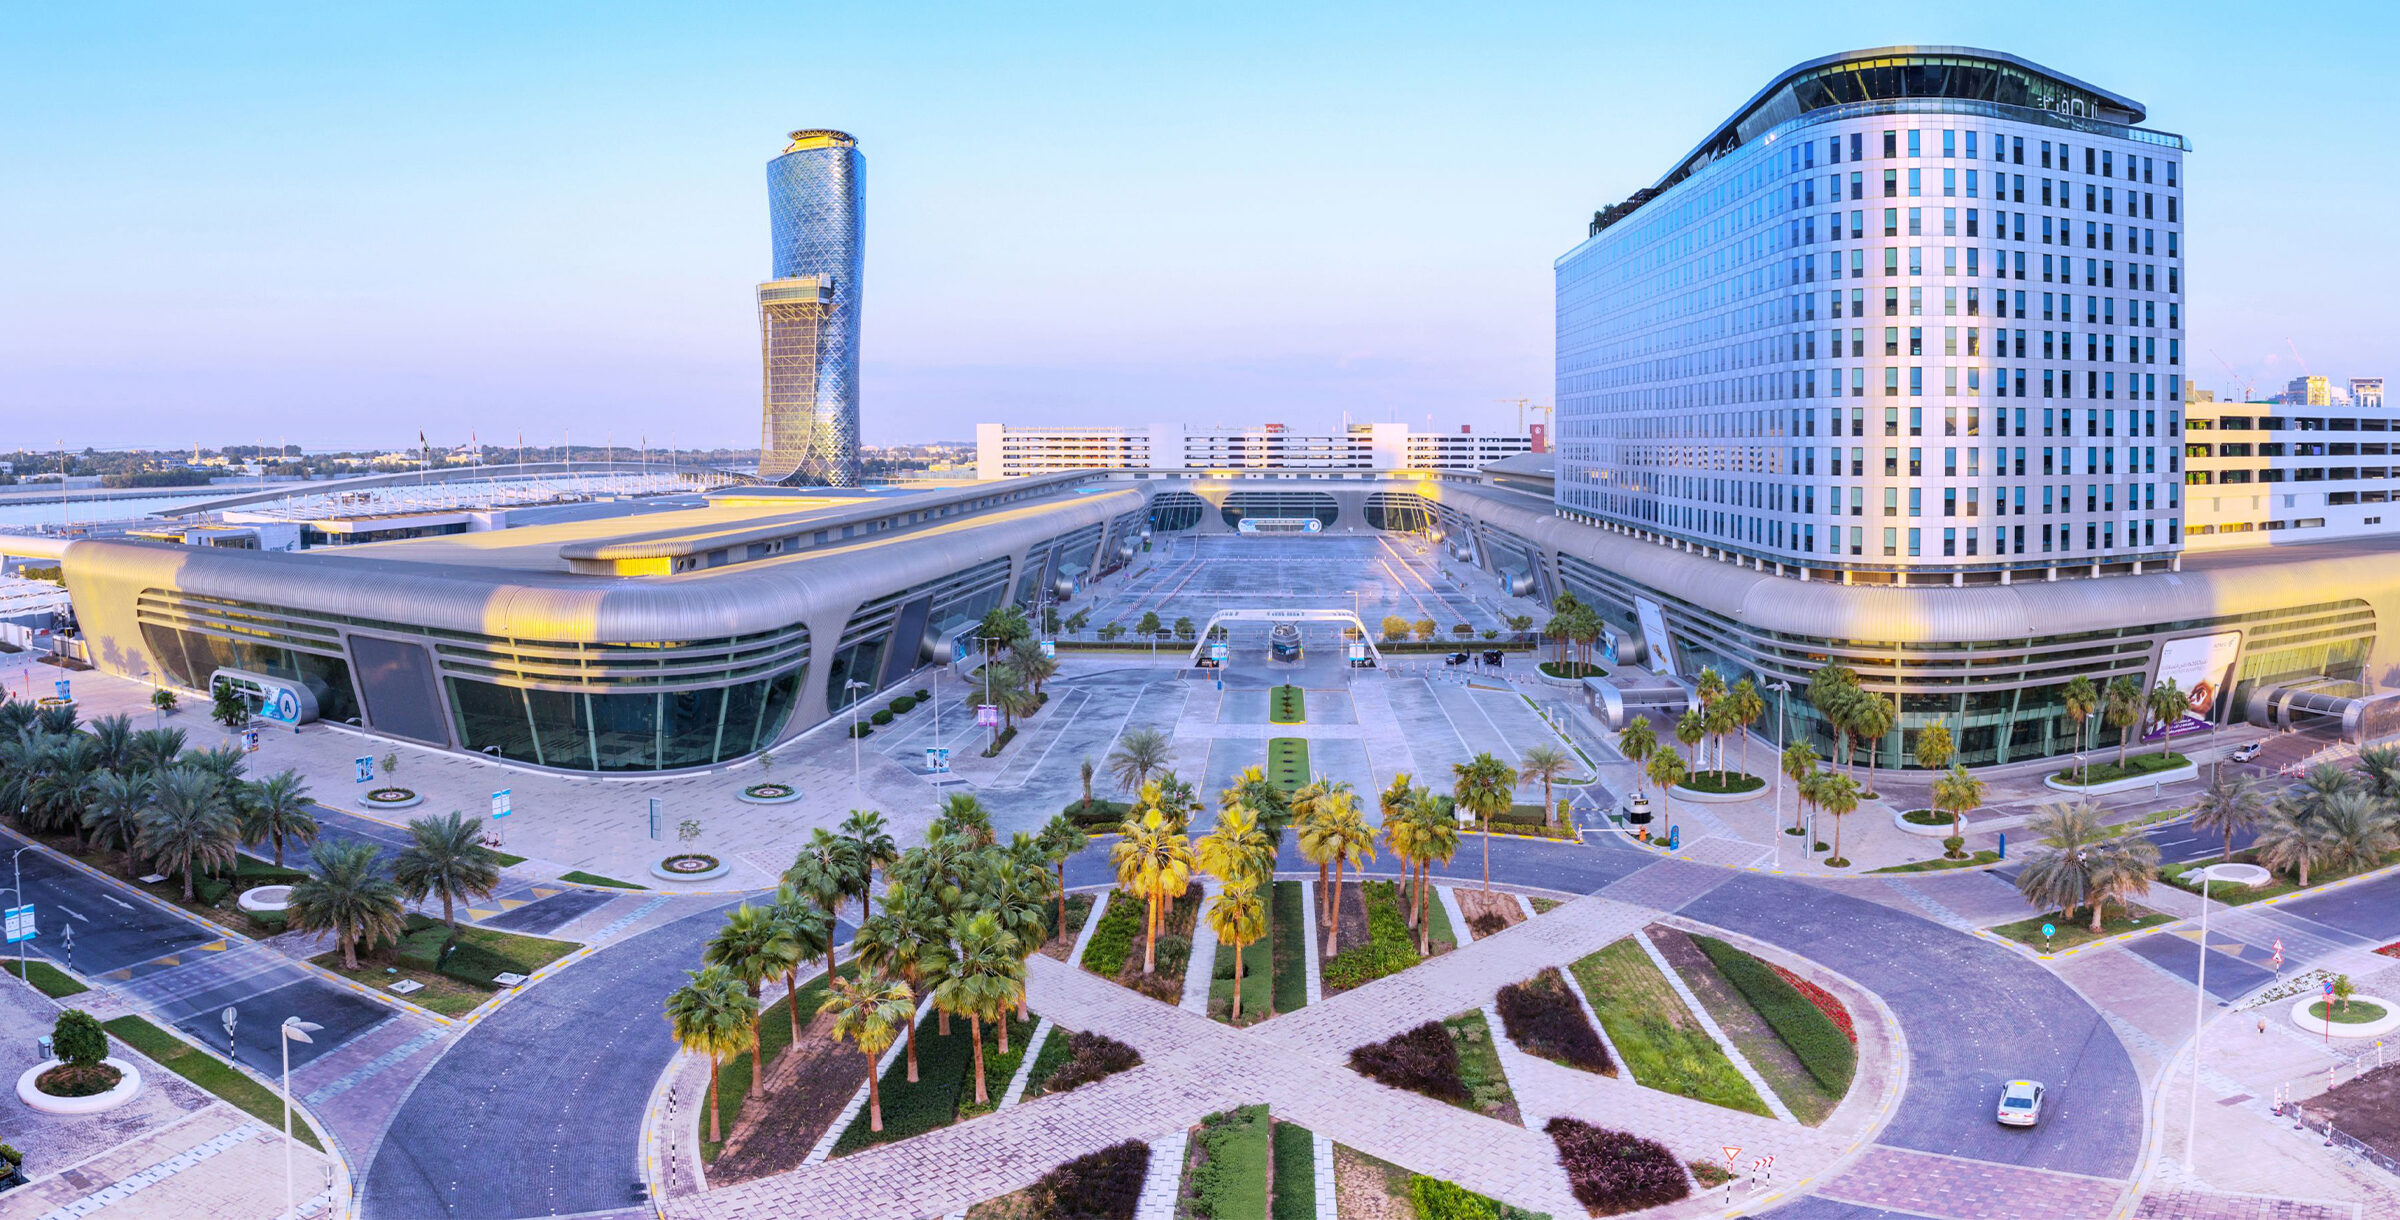 Transvac will be exhibiting at Adipec 2023 in Abu Dhabi